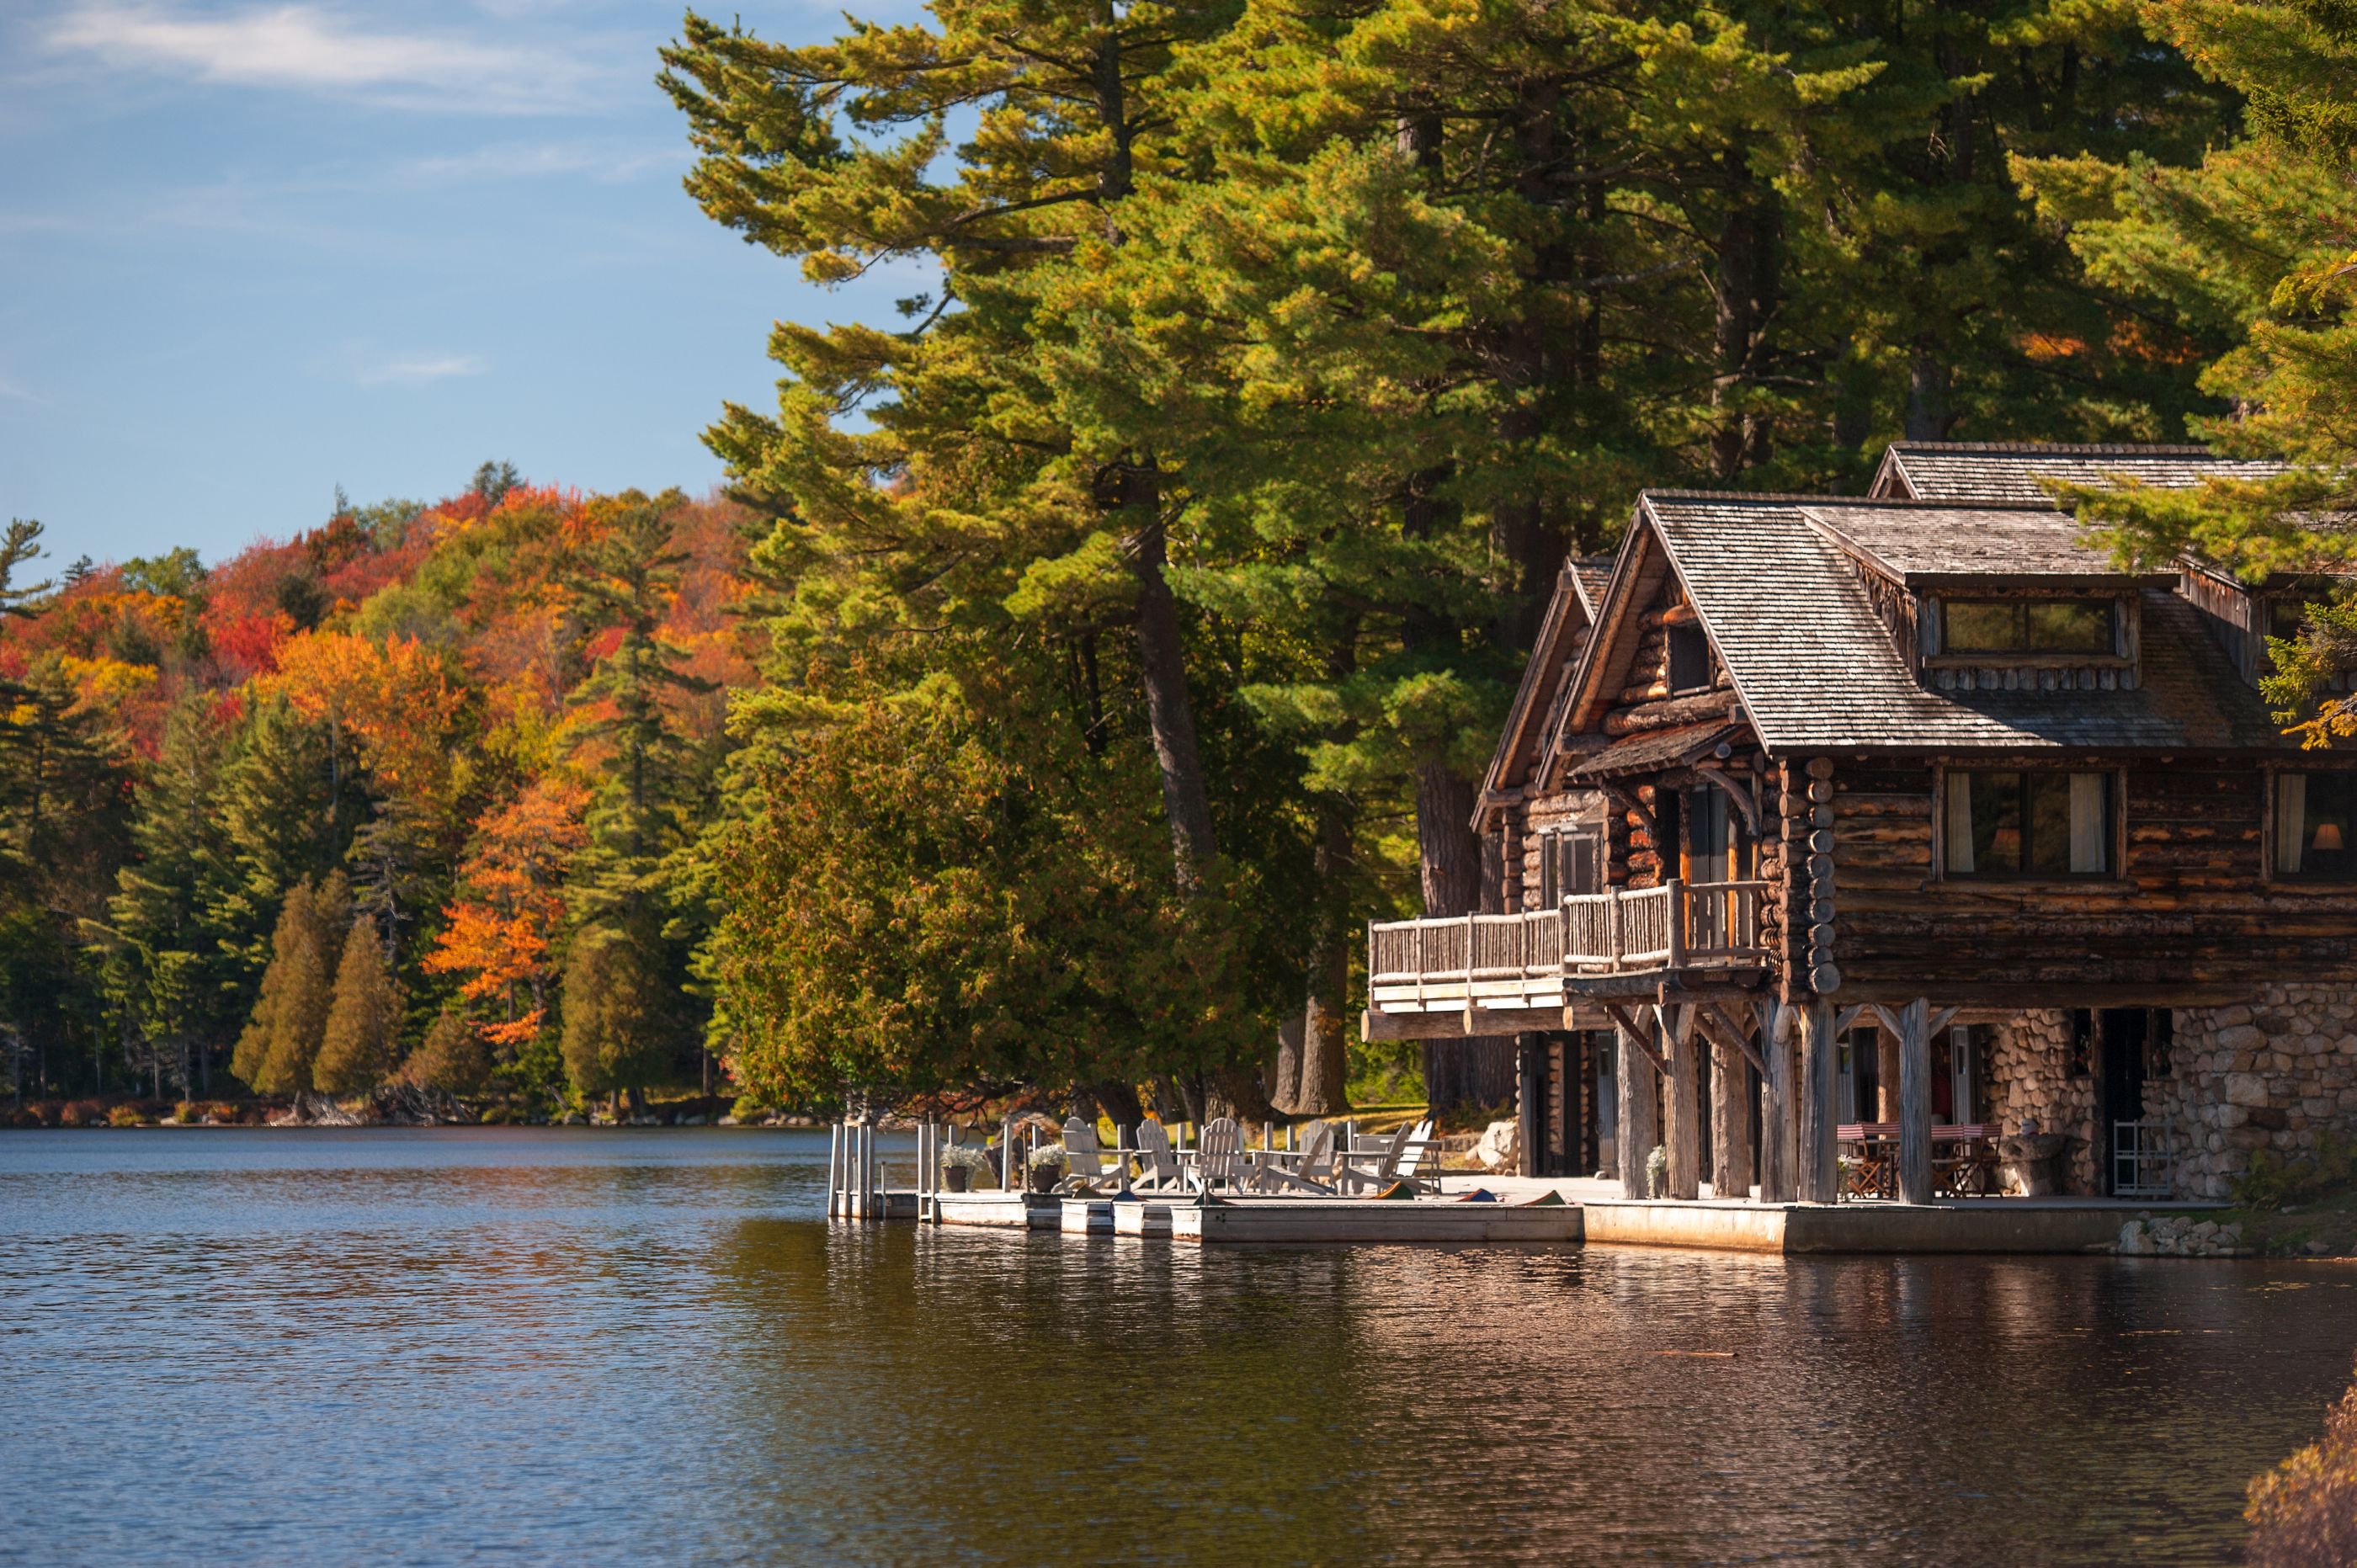 The boat house of Lake Kora, USA